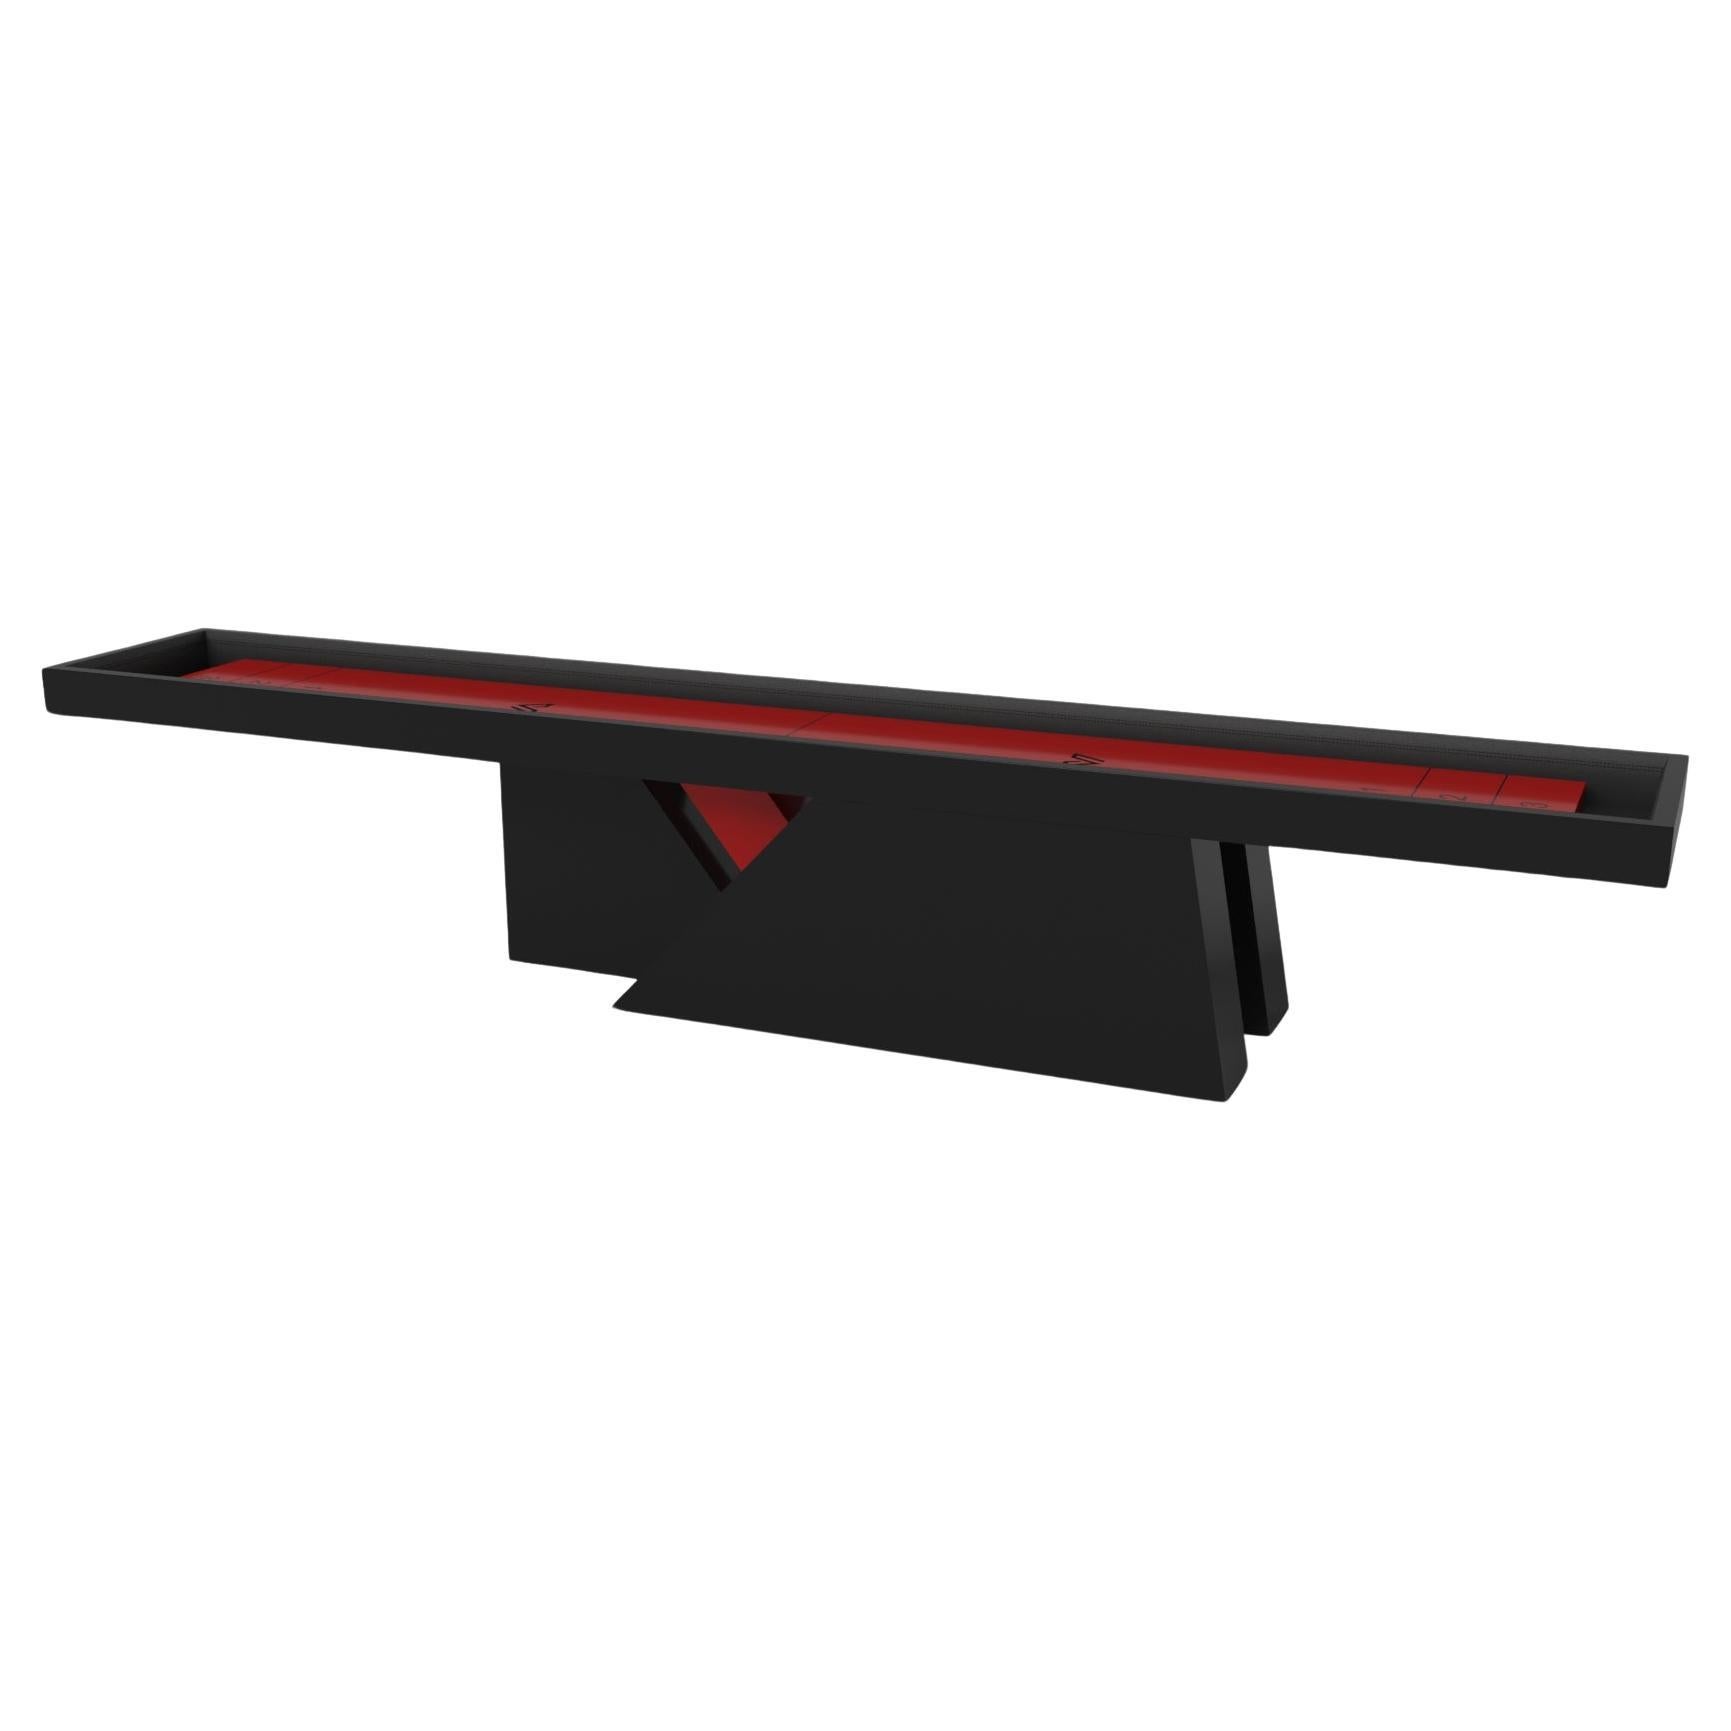 Elevate Customs Stilt Shuffleboard Tables / Solid Pantone Black Color in 9' -USA